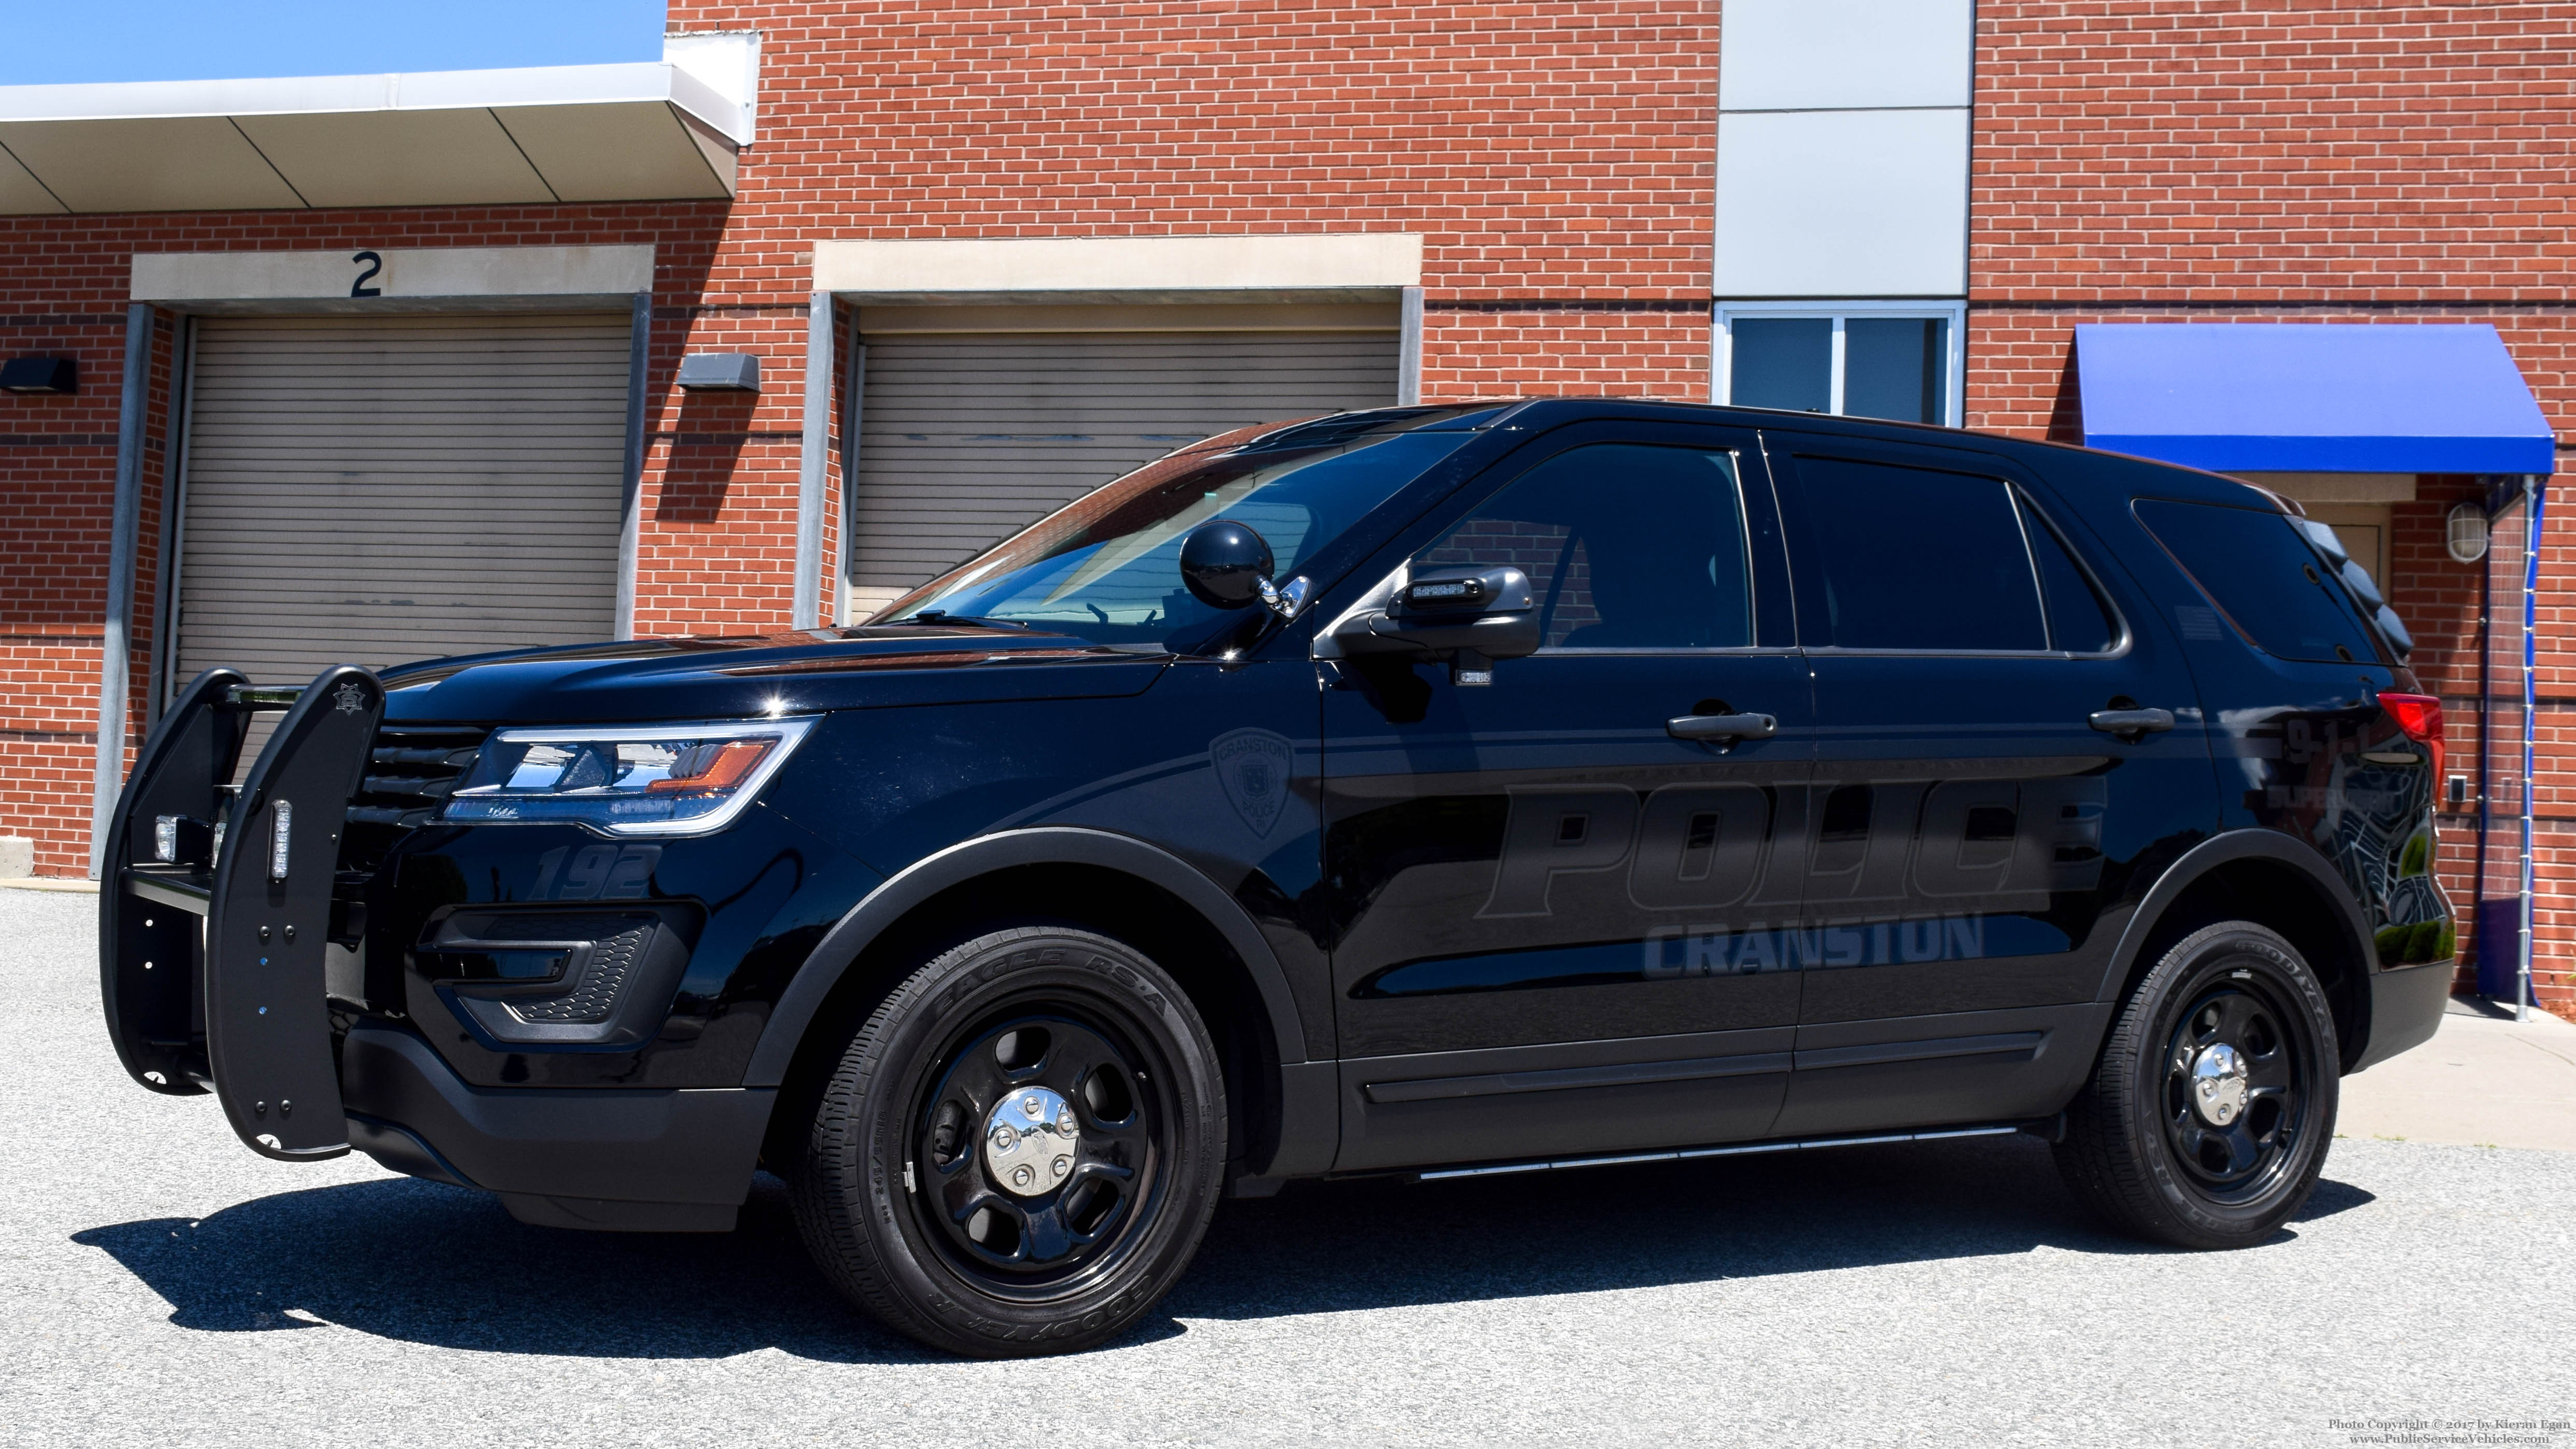 A photo  of Cranston Police
            Cruiser 192, a 2016 Ford Police Interceptor Utility             taken by Kieran Egan